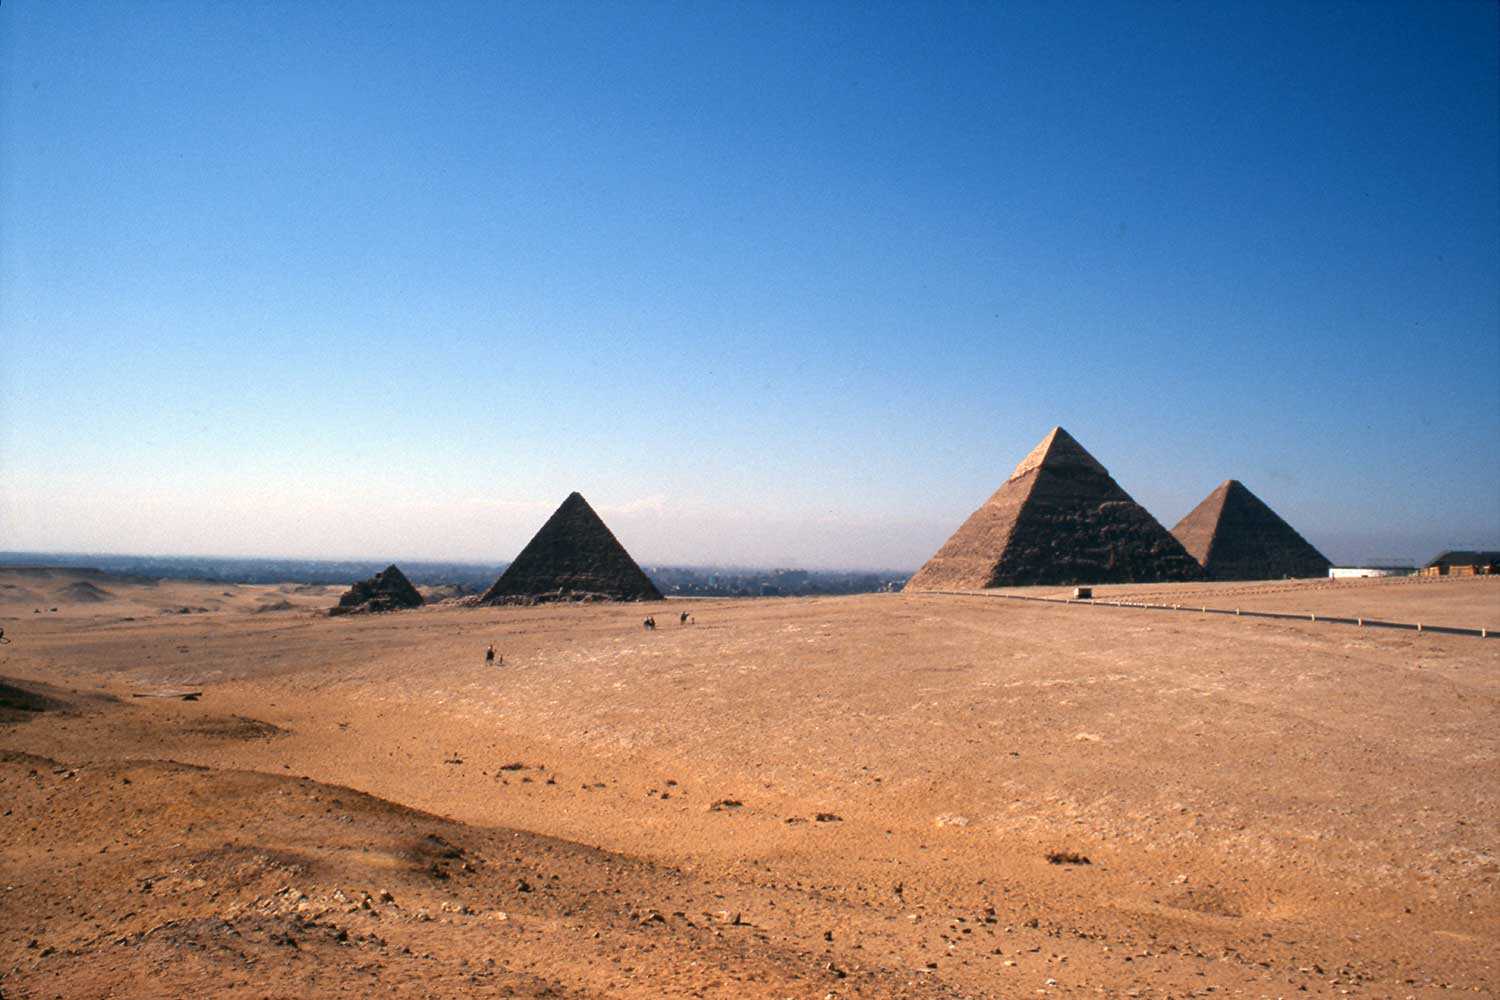 The Pyramids at Giza, Cairo, Egypt. (Photo courtesy of Dena Doroszenko)